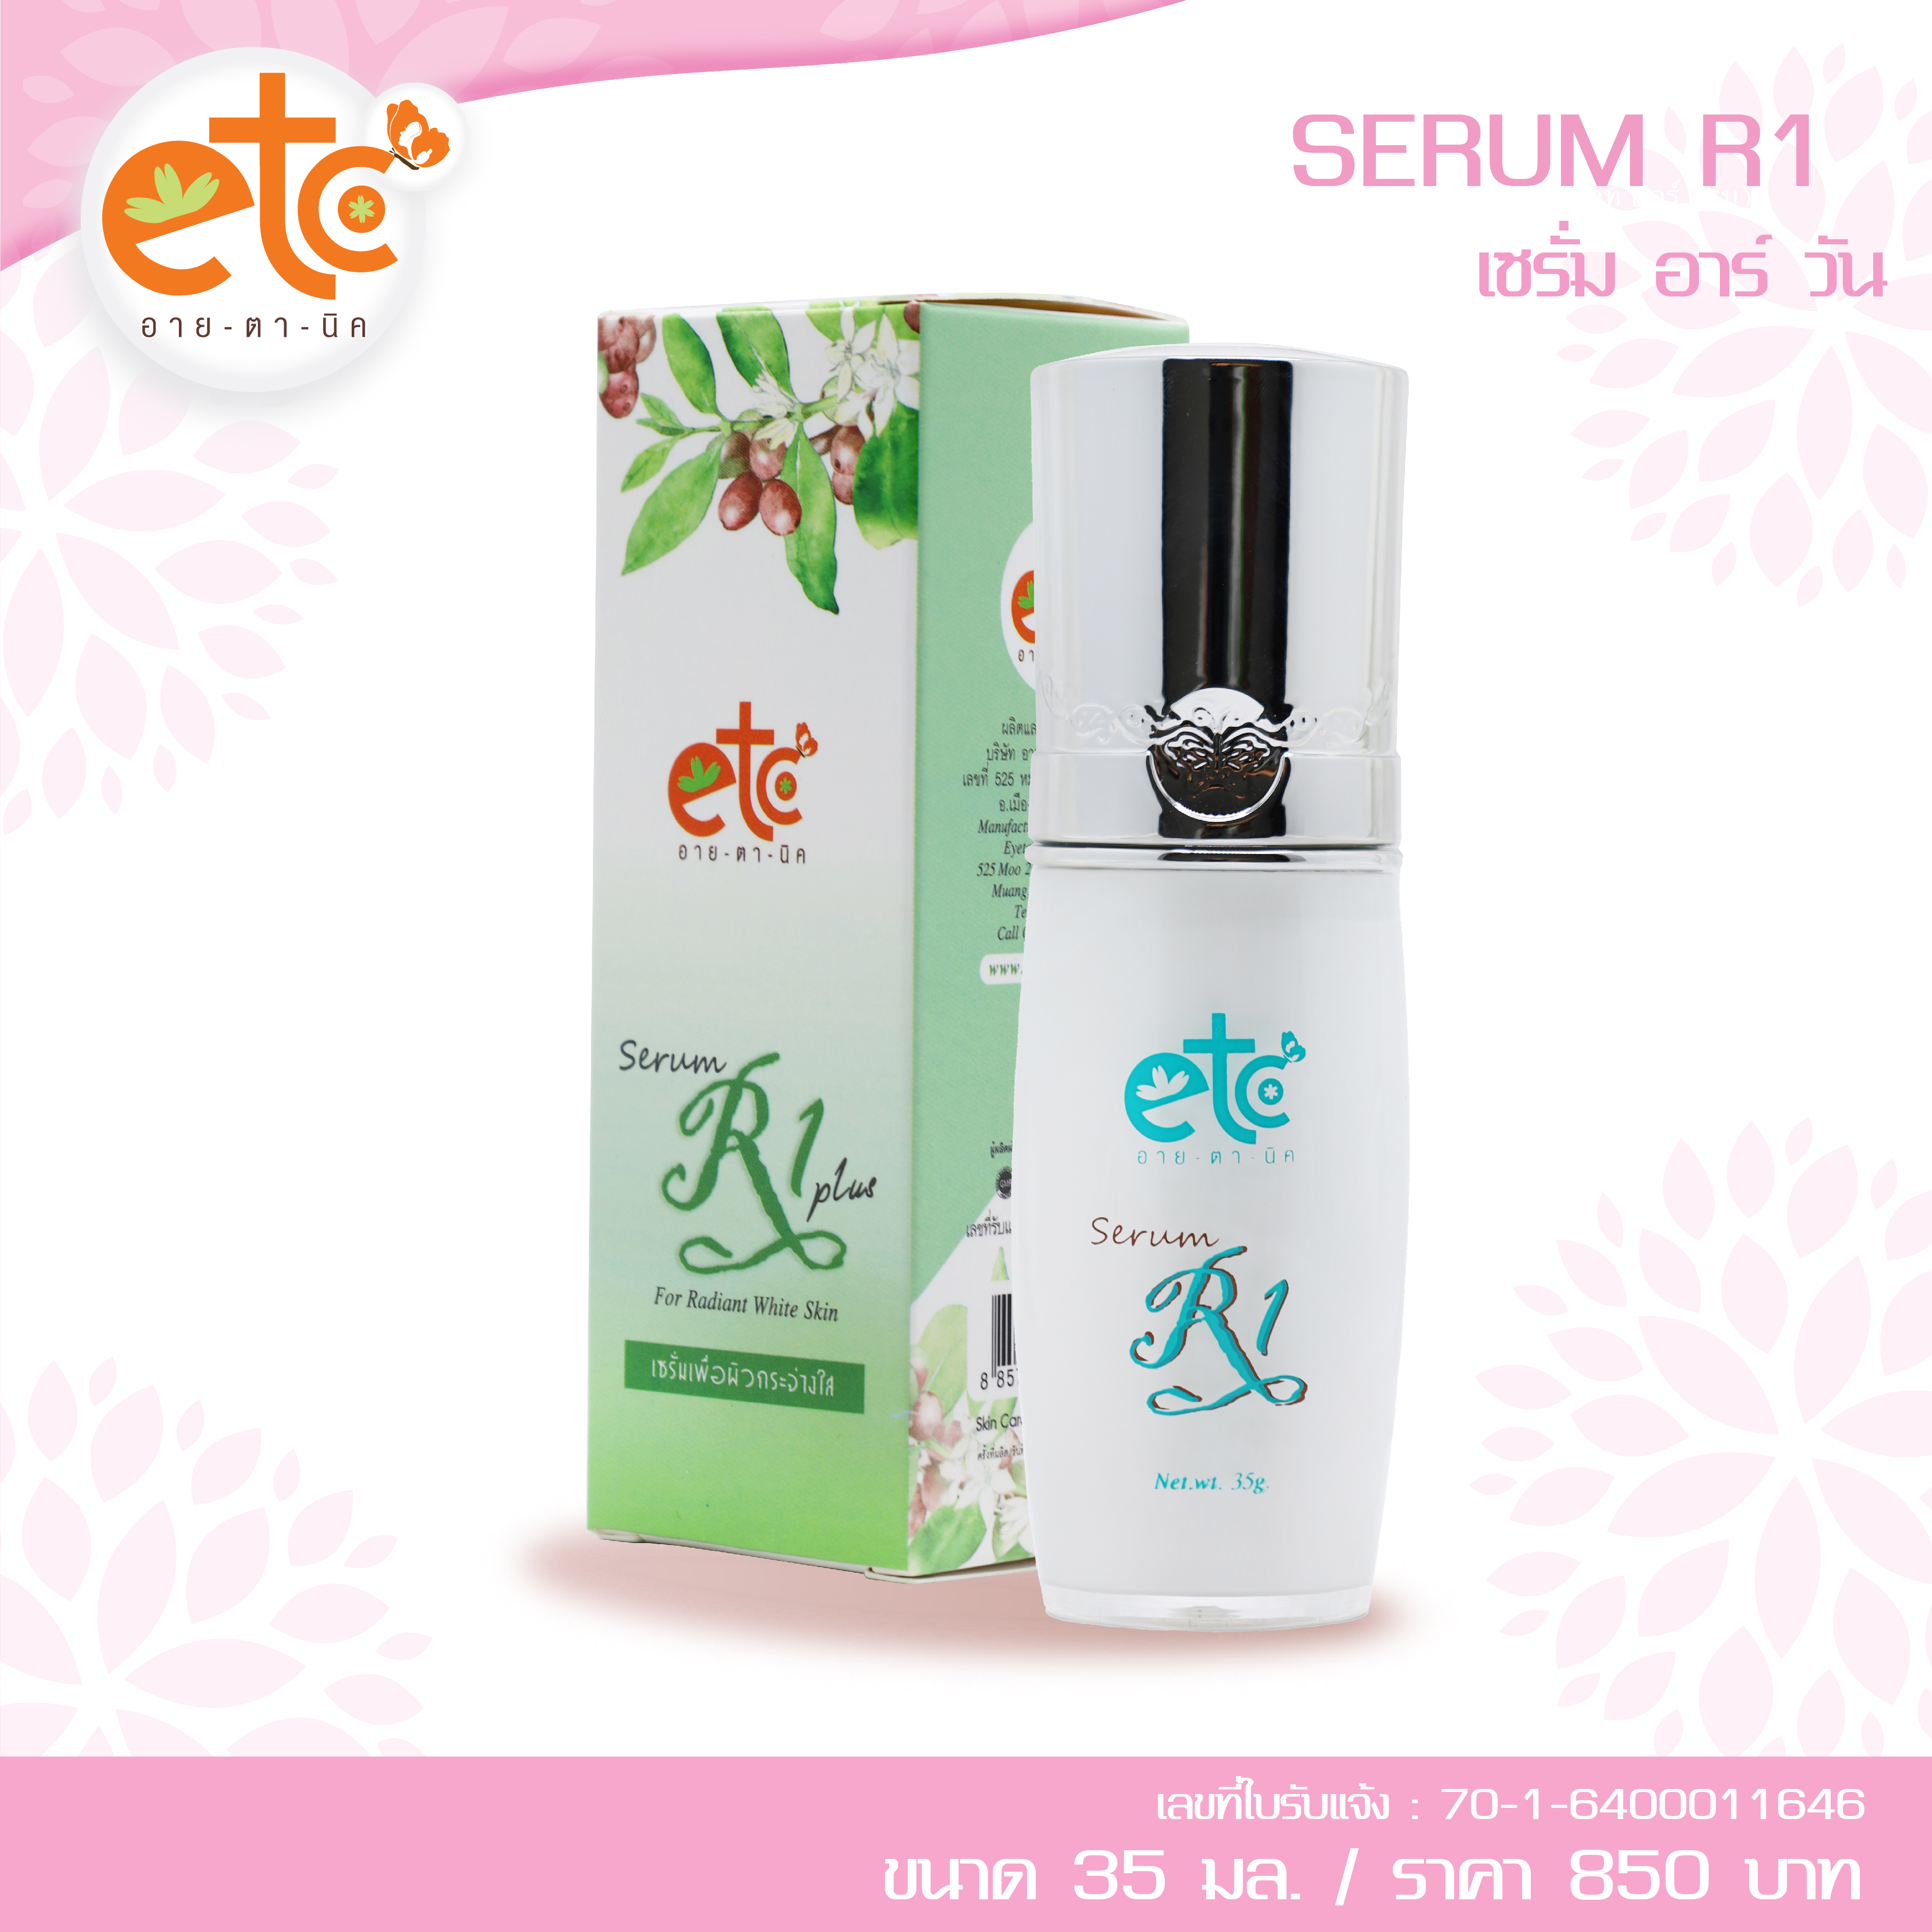 Serum R1